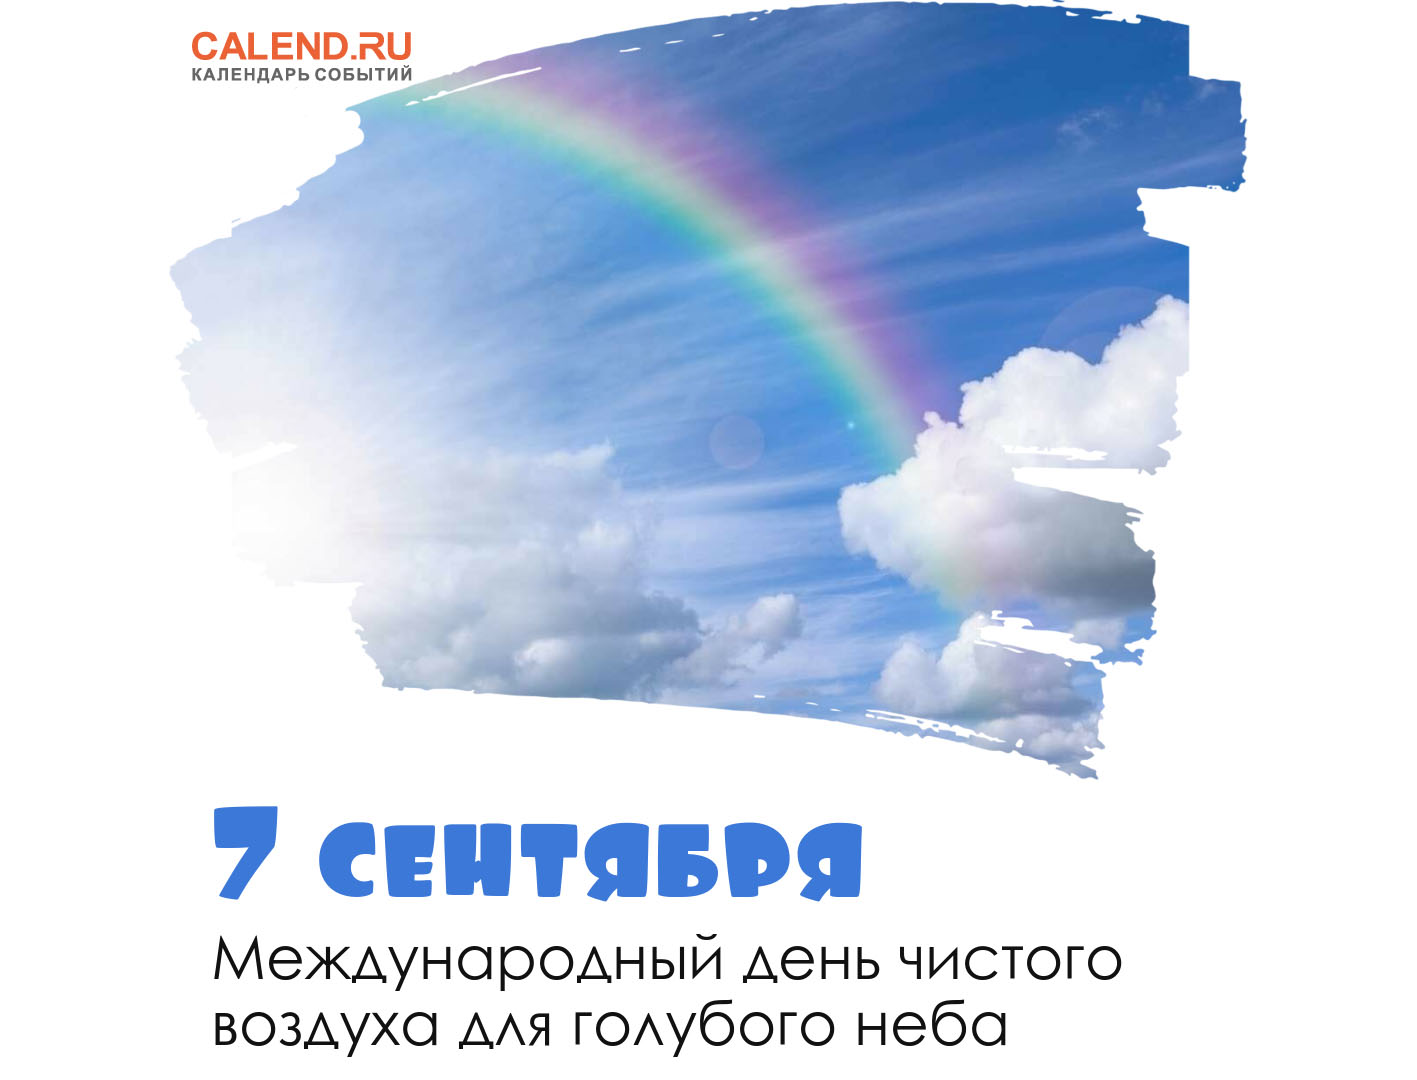 https://www.calend.ru/calendar/wp-content/uploads/07-1-sentyabrya.jpg